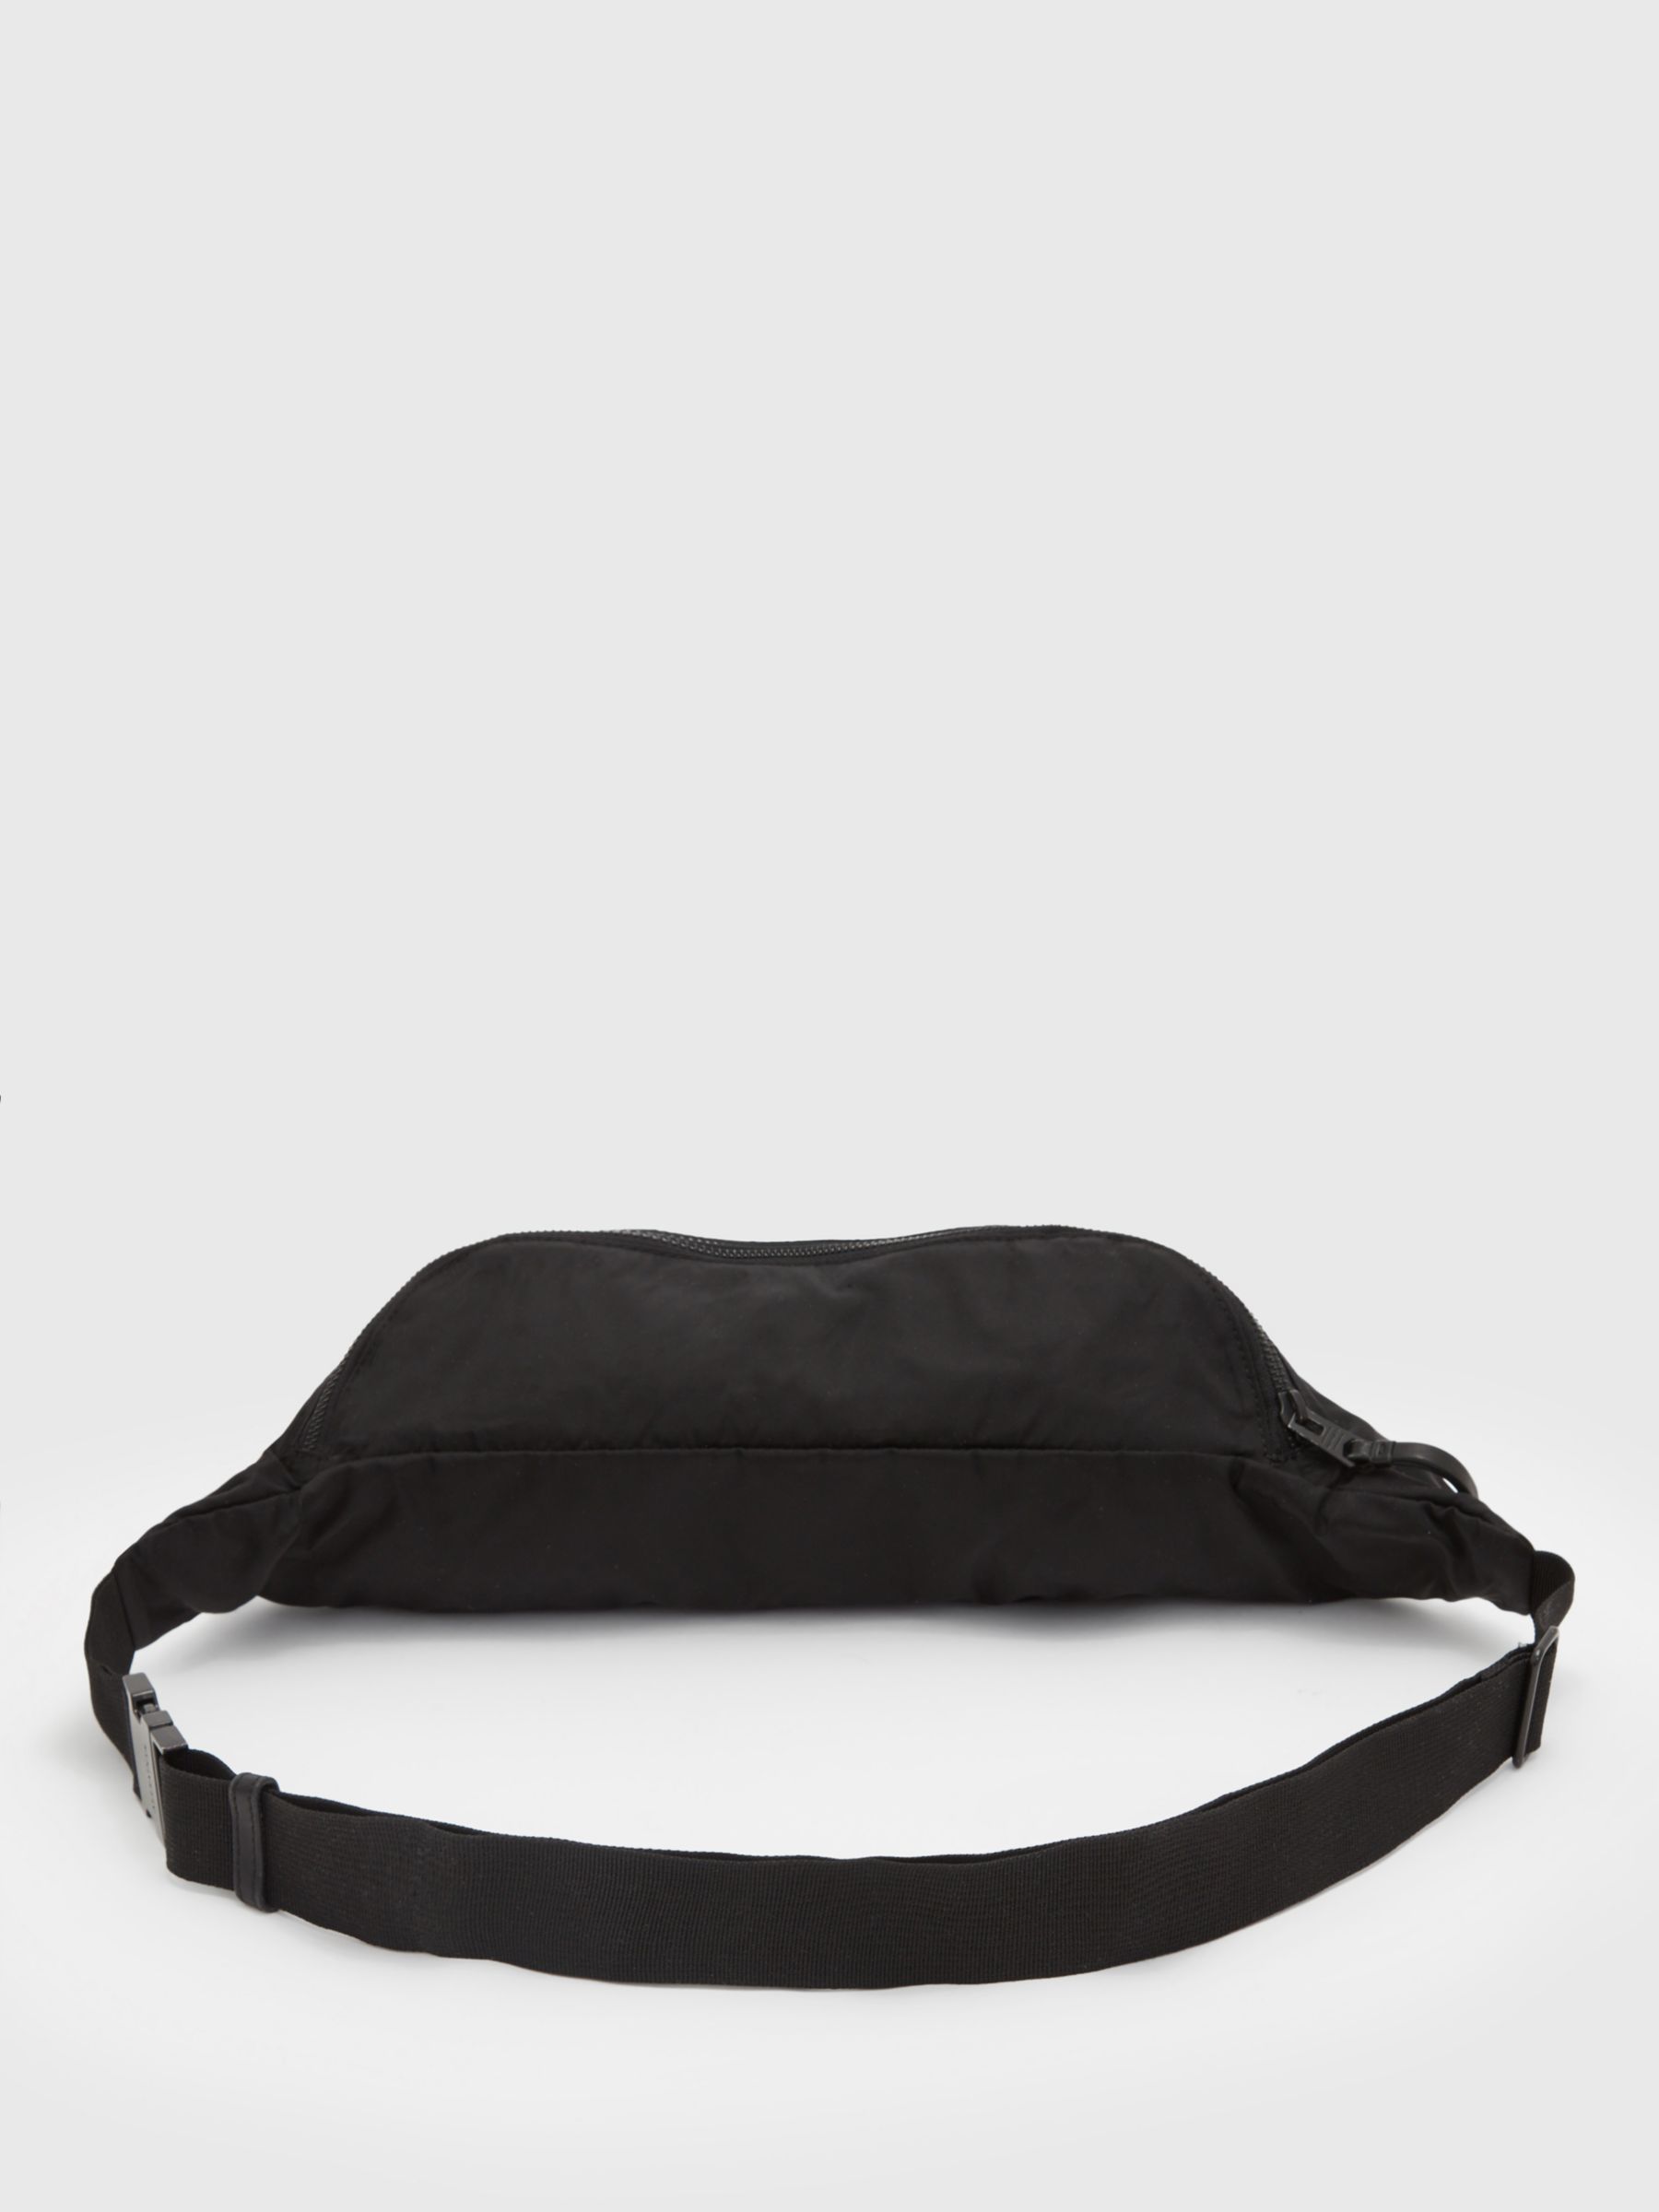 AllSaints Spitafields Nylon Bum Bag, Black at John Lewis & Partners